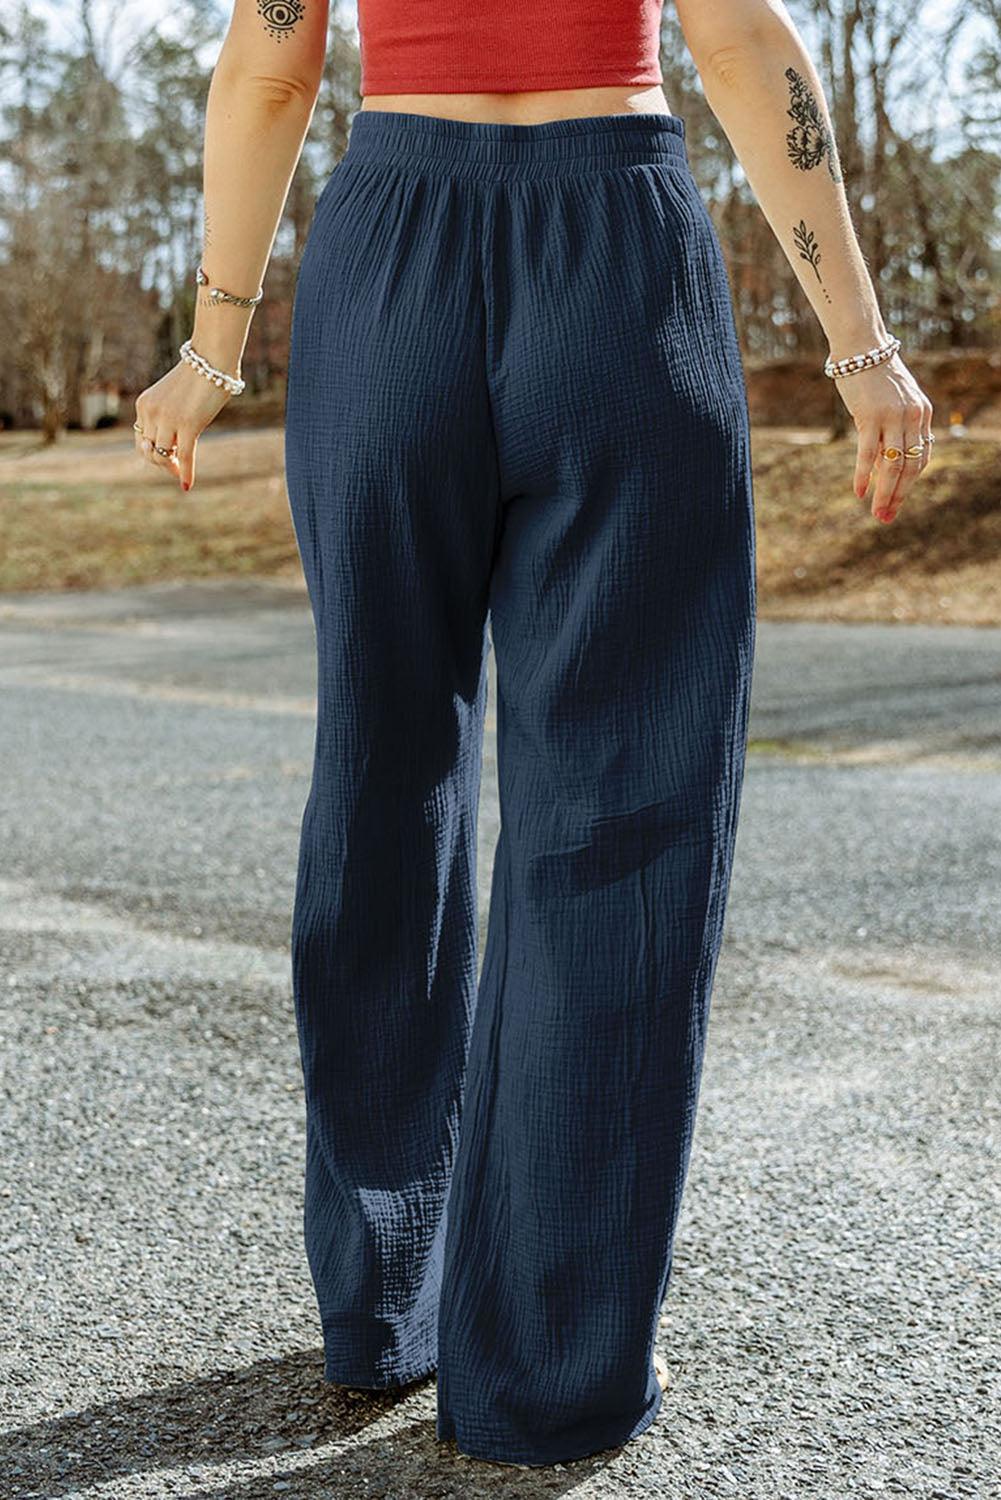 Bona Fide Fashion - Texture Tied Wide Leg Pants - Women Fashion - Bona Fide Fashion